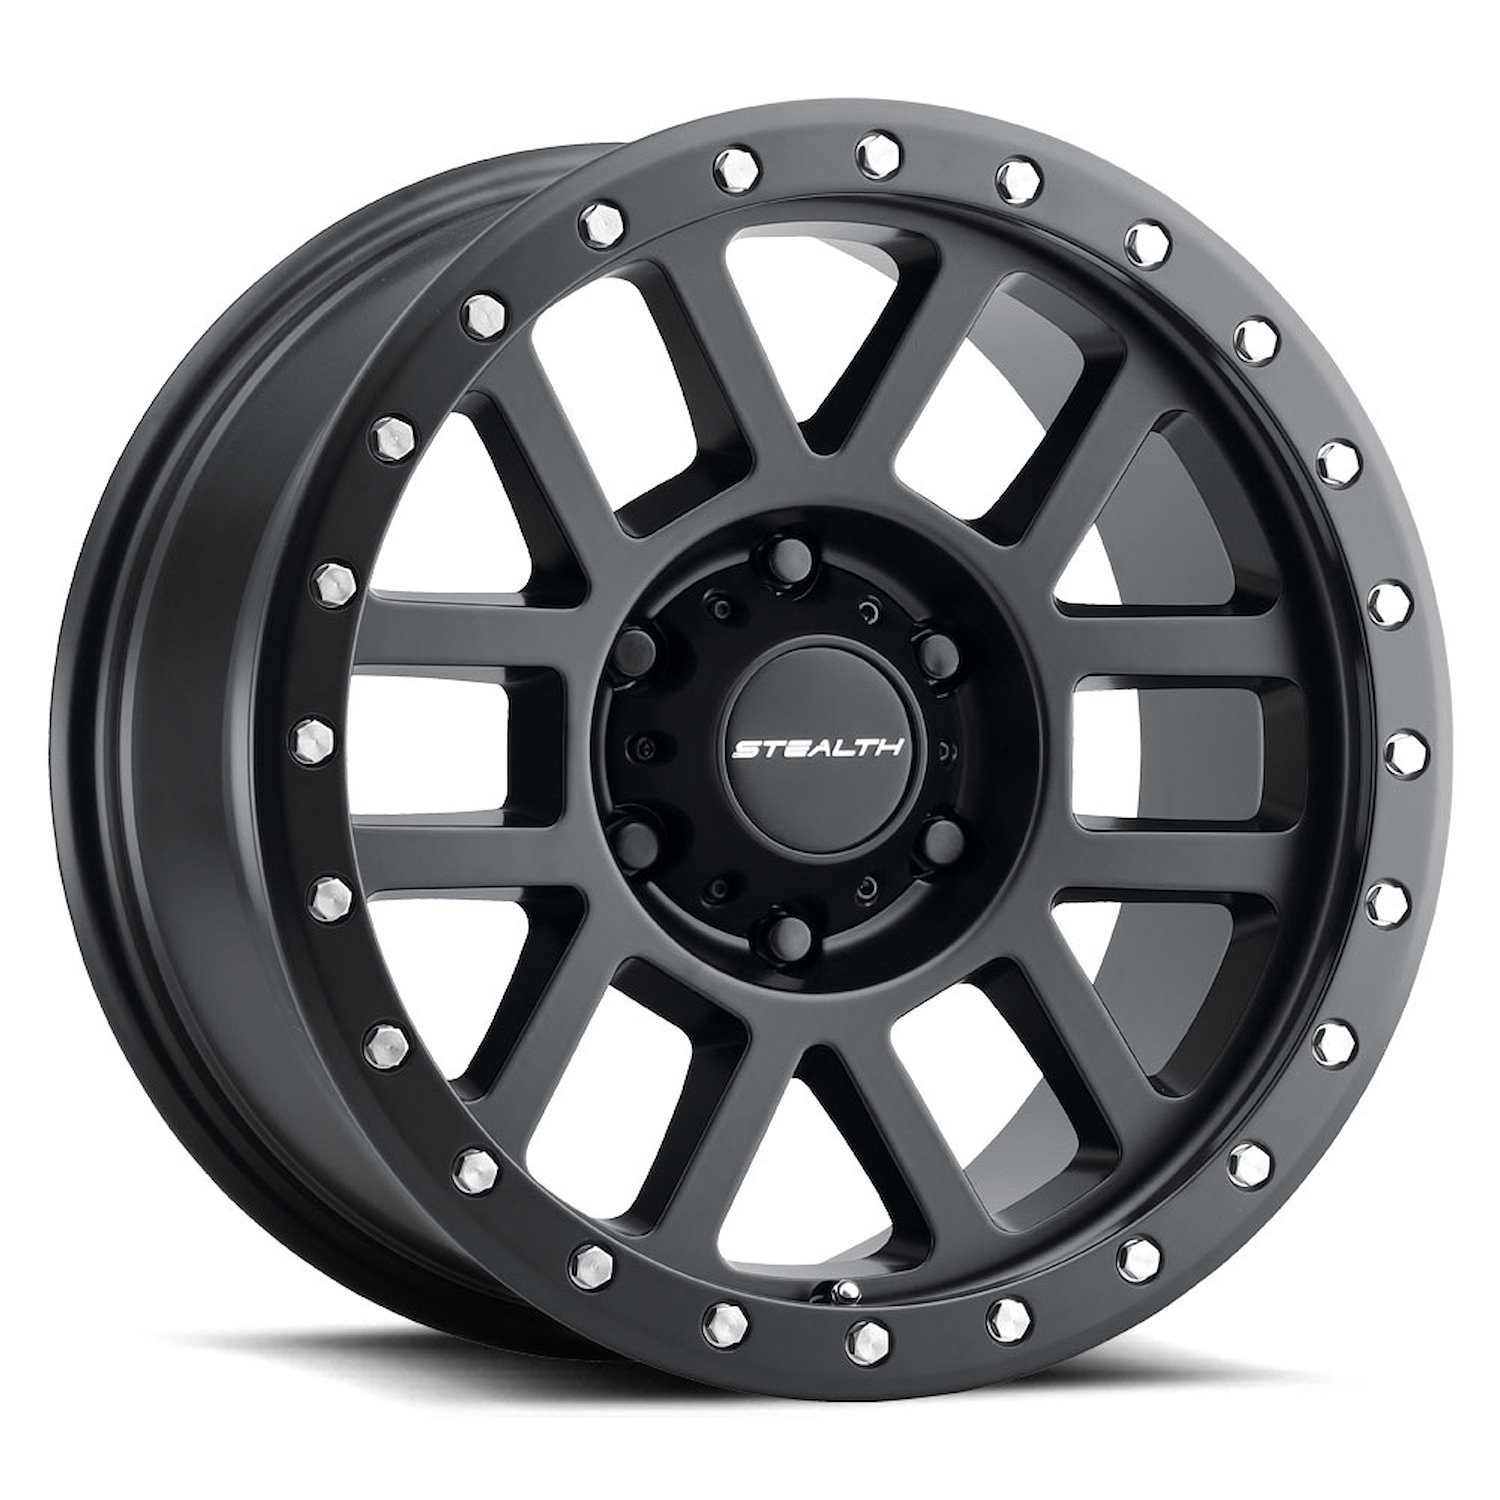 Simulated Beadlock Matte Black Stealth D-Window Wheel (Series 772BL) Size: 17" x 8.5